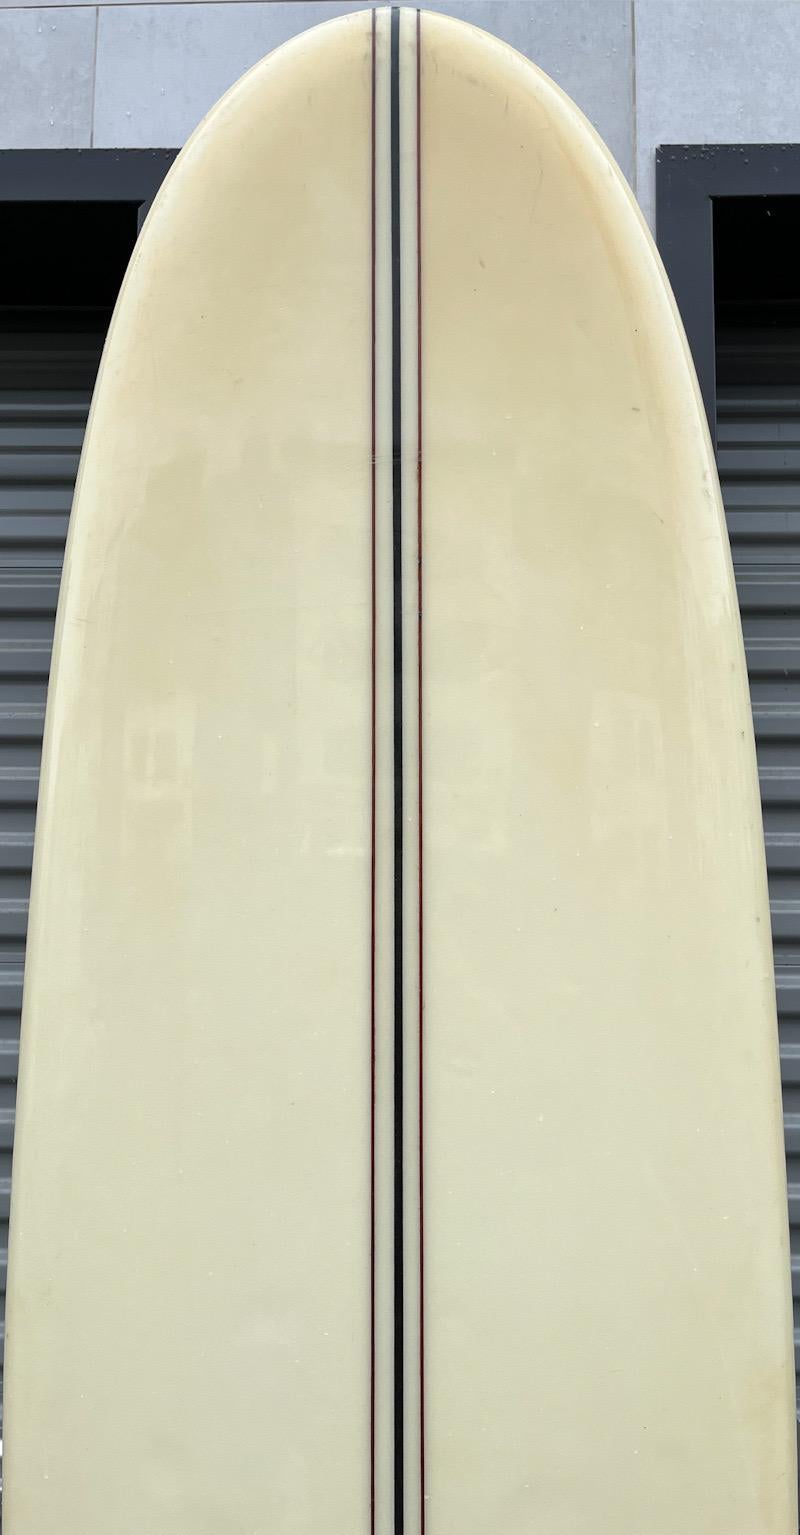 Américain Longboard vintage David Nuuhiwa modèle de Donald Takayama des années 1980